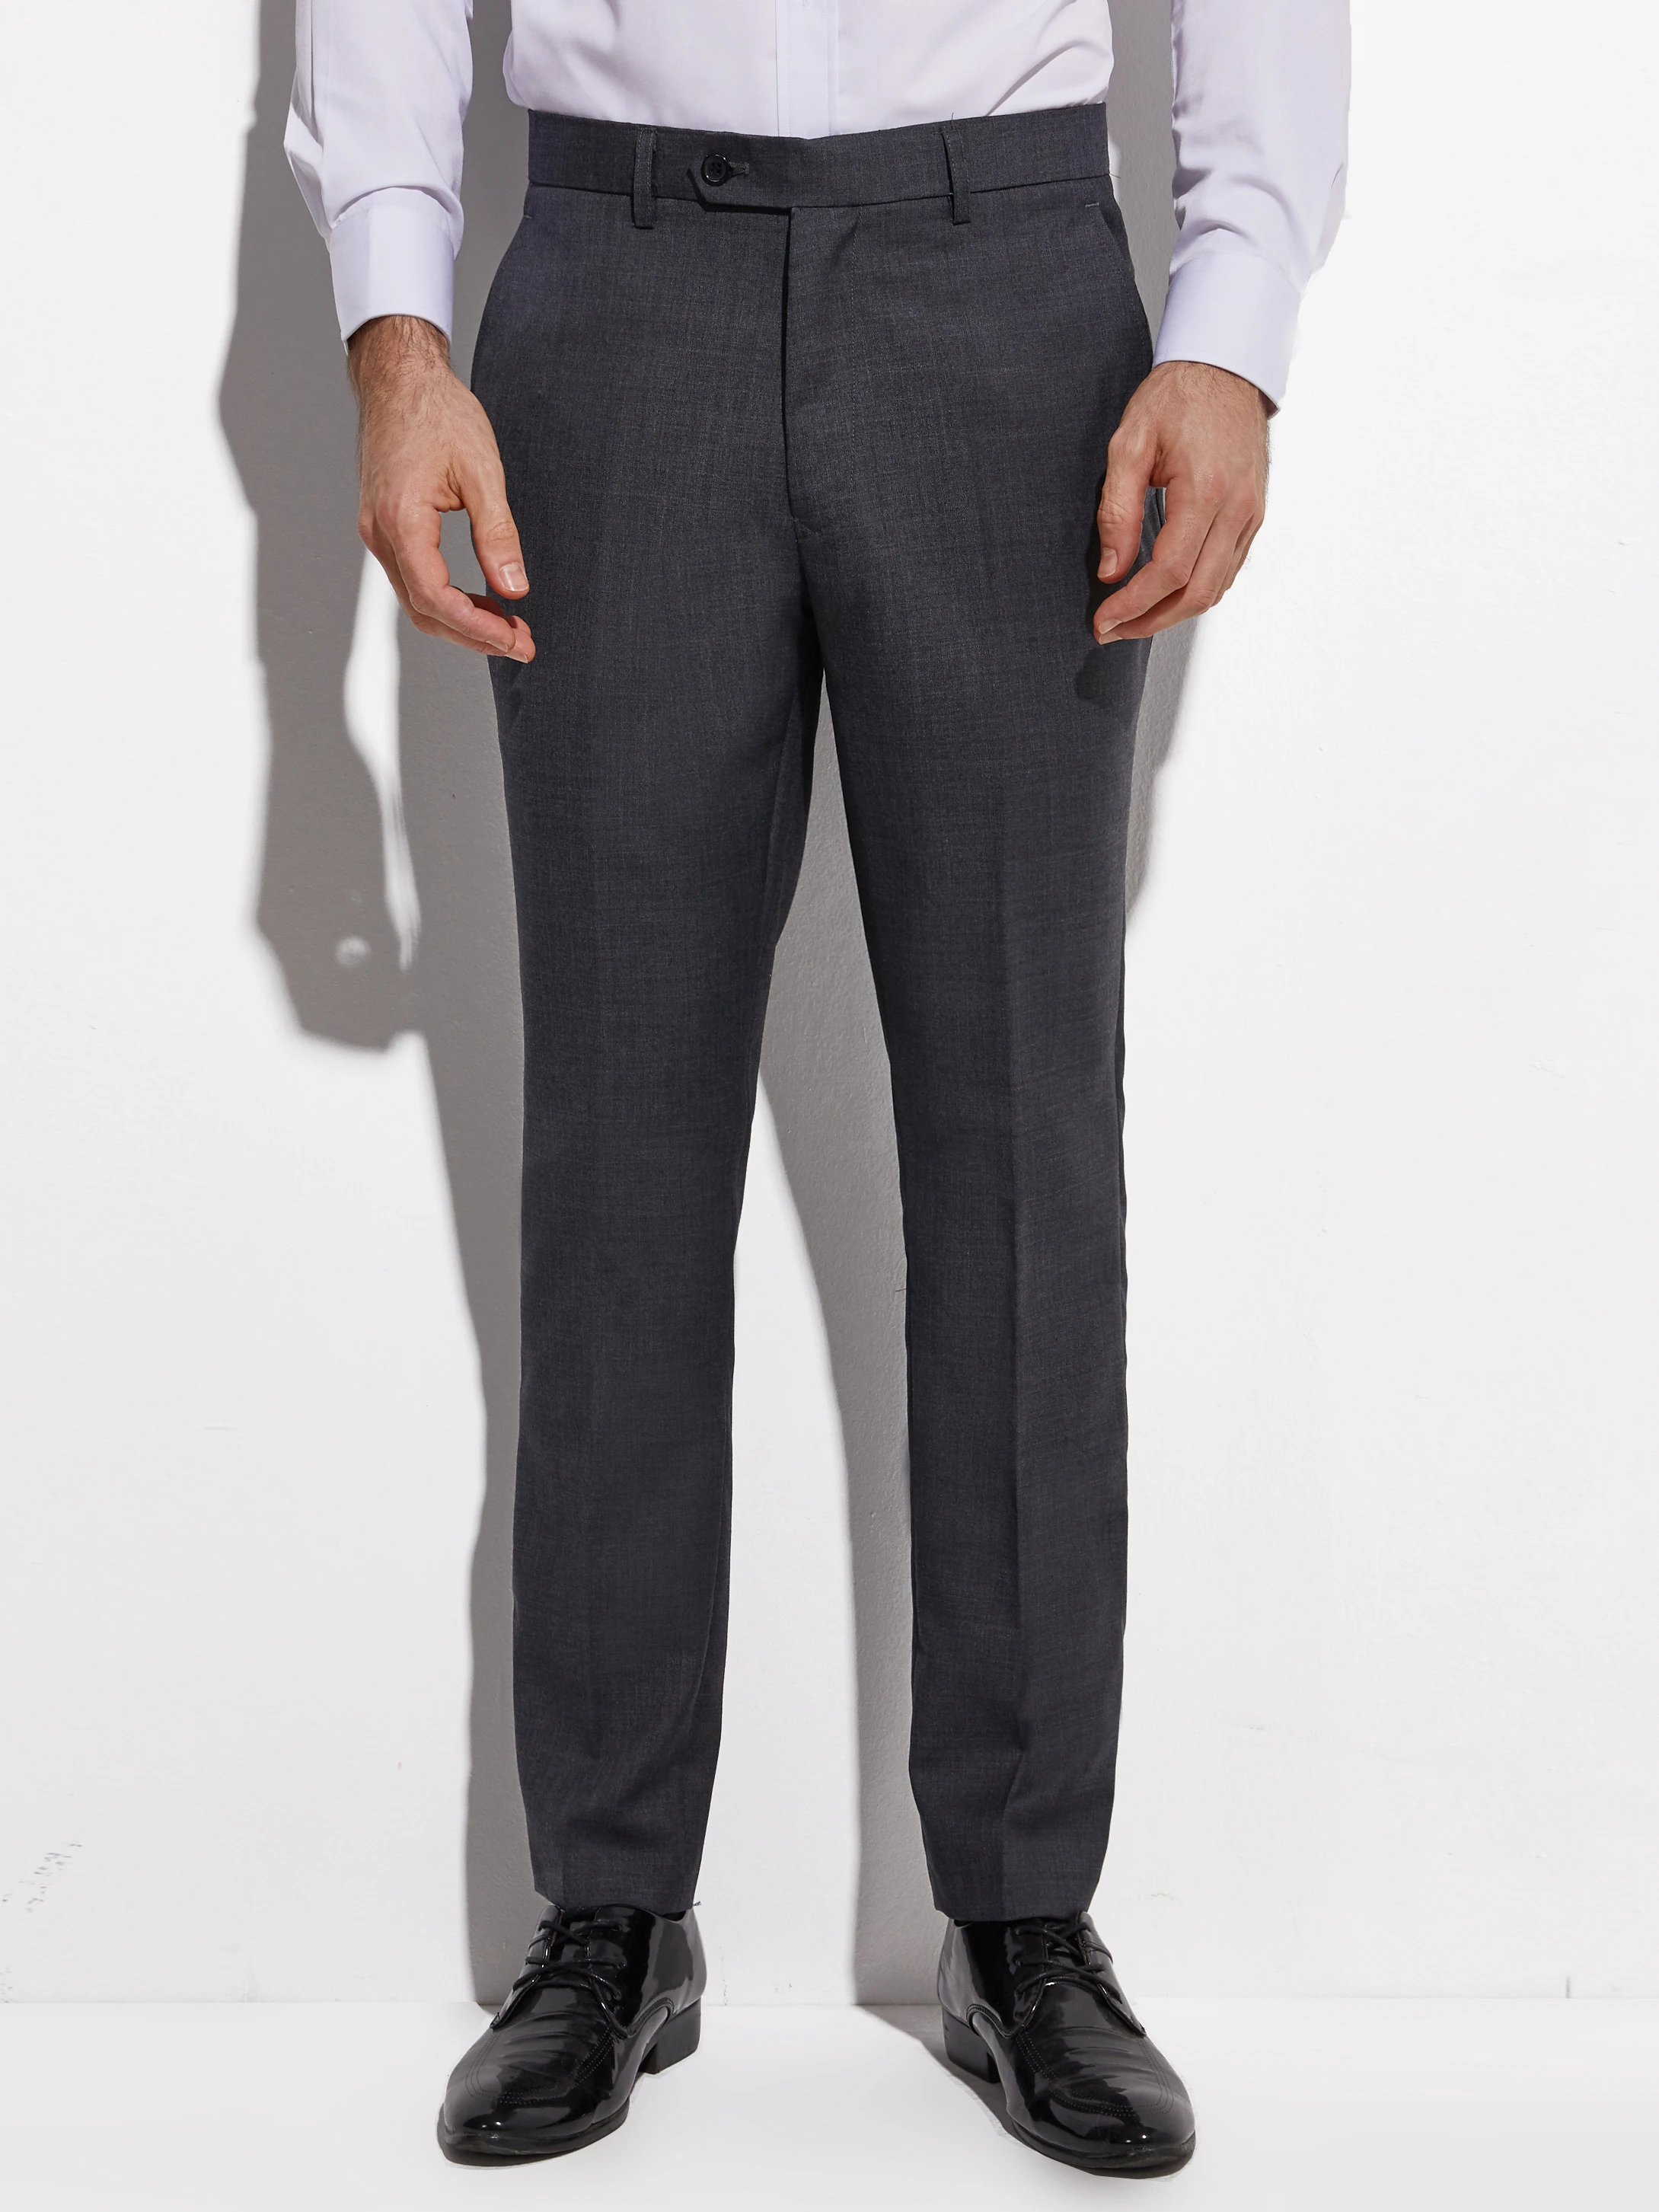 Men Pants Men Slim Fit Business Pants For Men Custom Made Pants Tailor Made Trousers Tailored